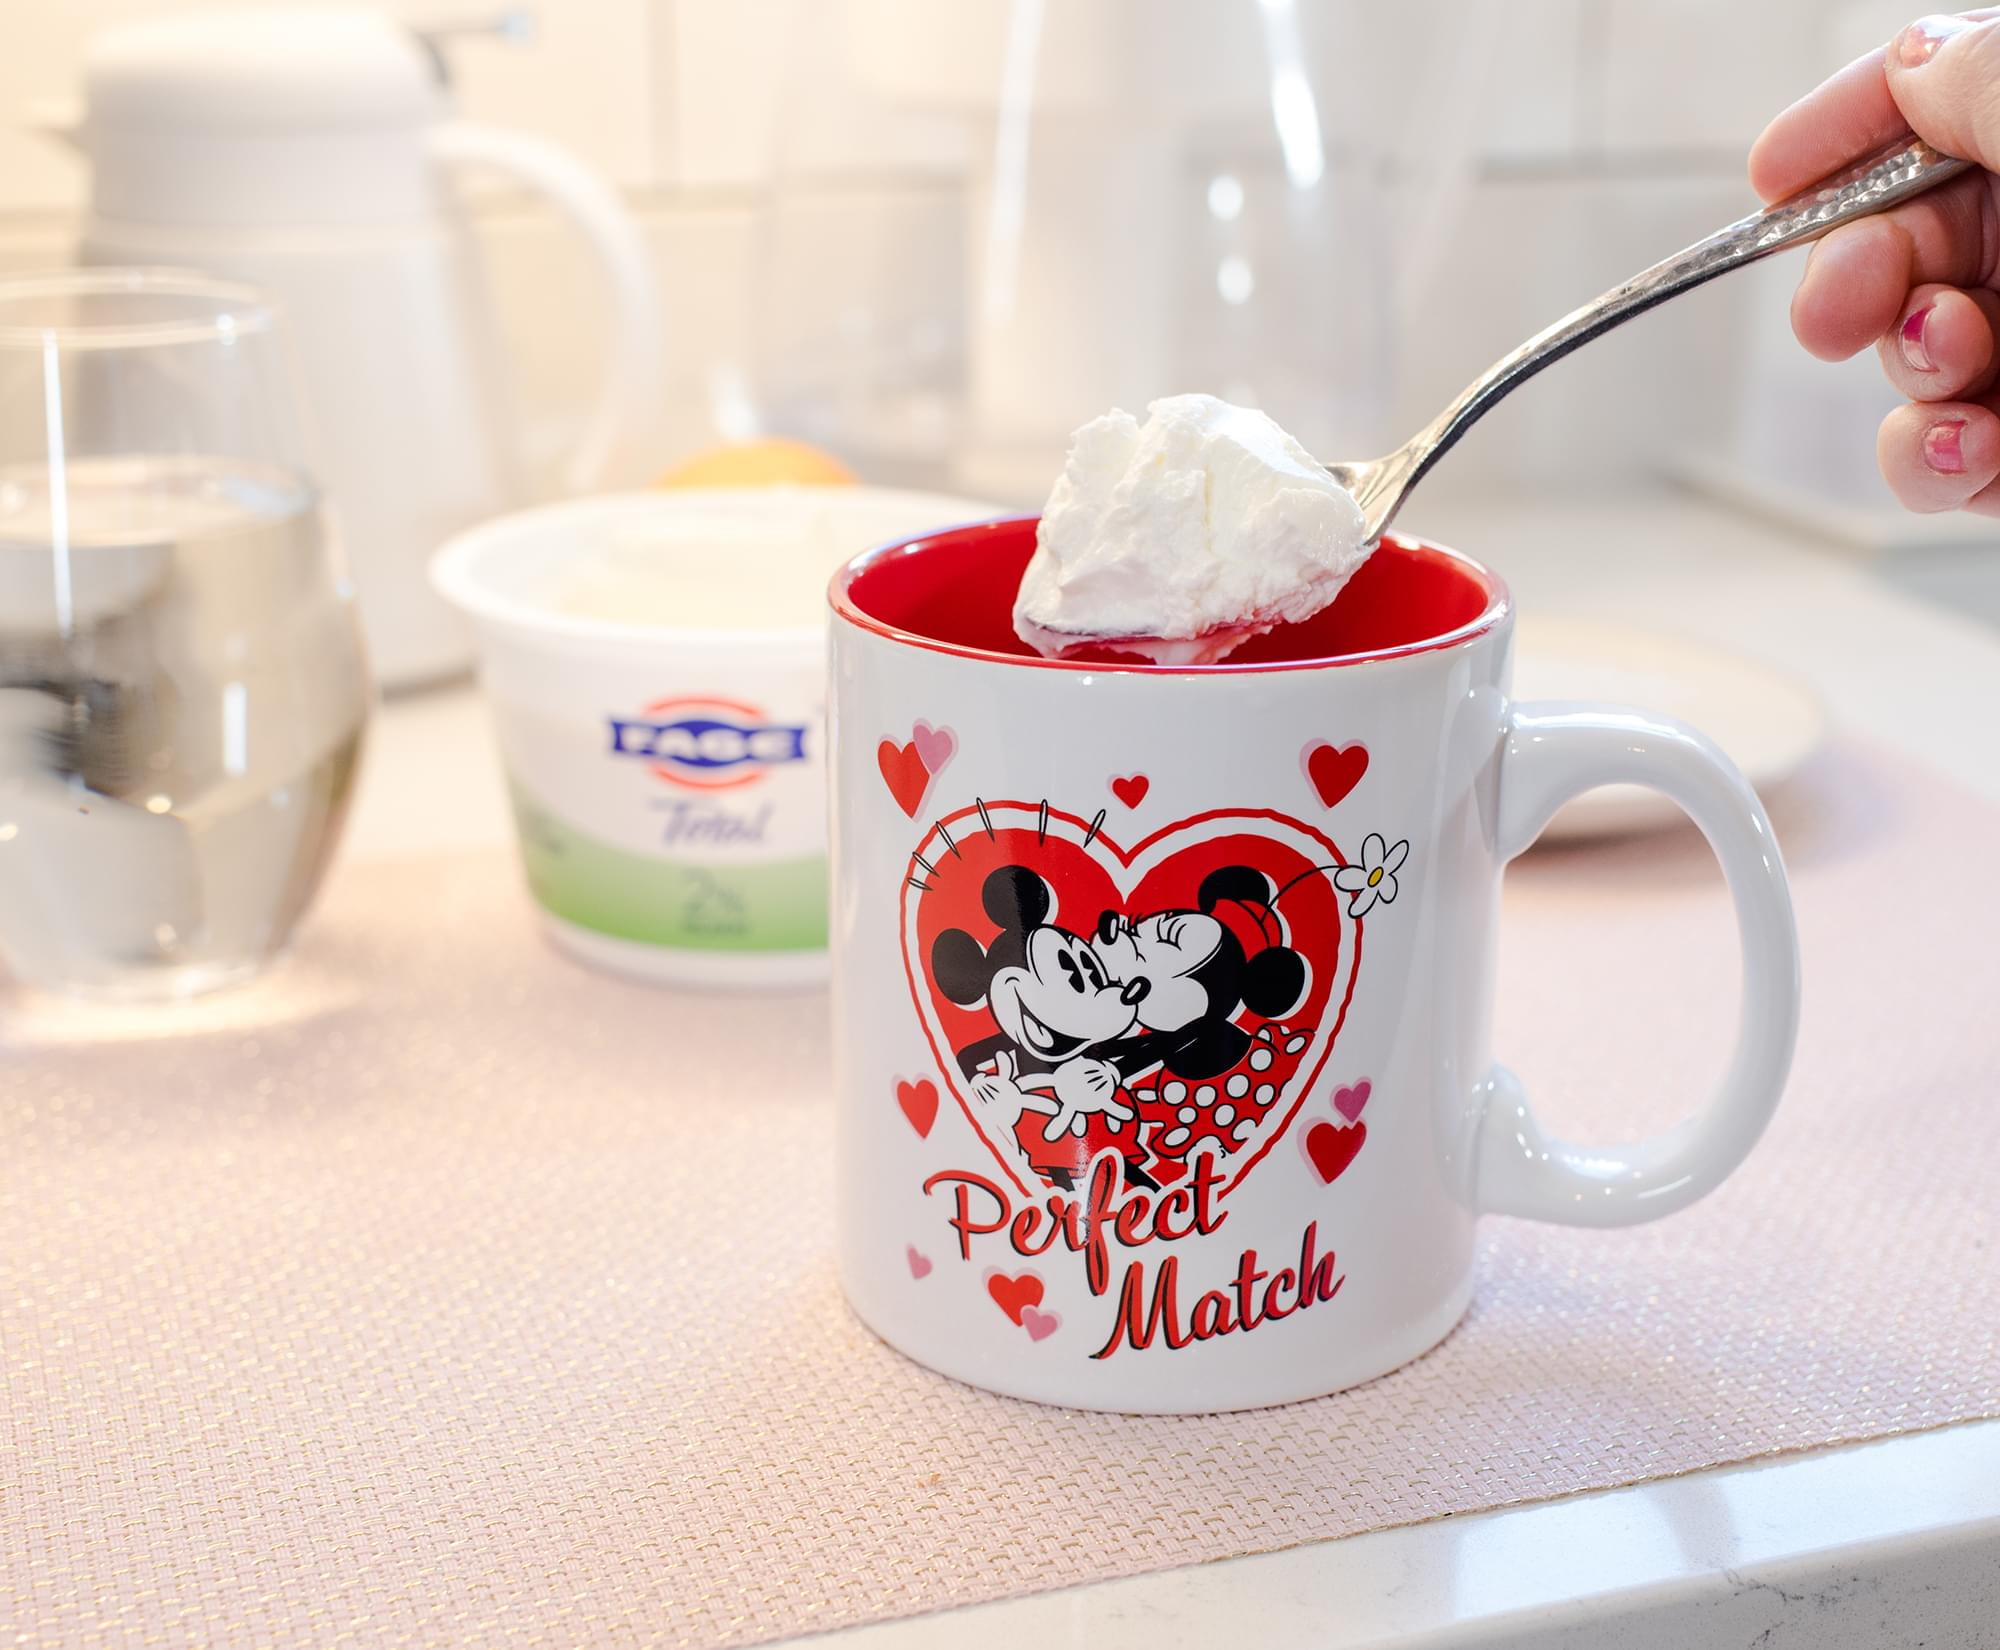 Disney White & Gray Mickey & Minnie Mouse 5-Piece Ceramic Stackable Mug Set